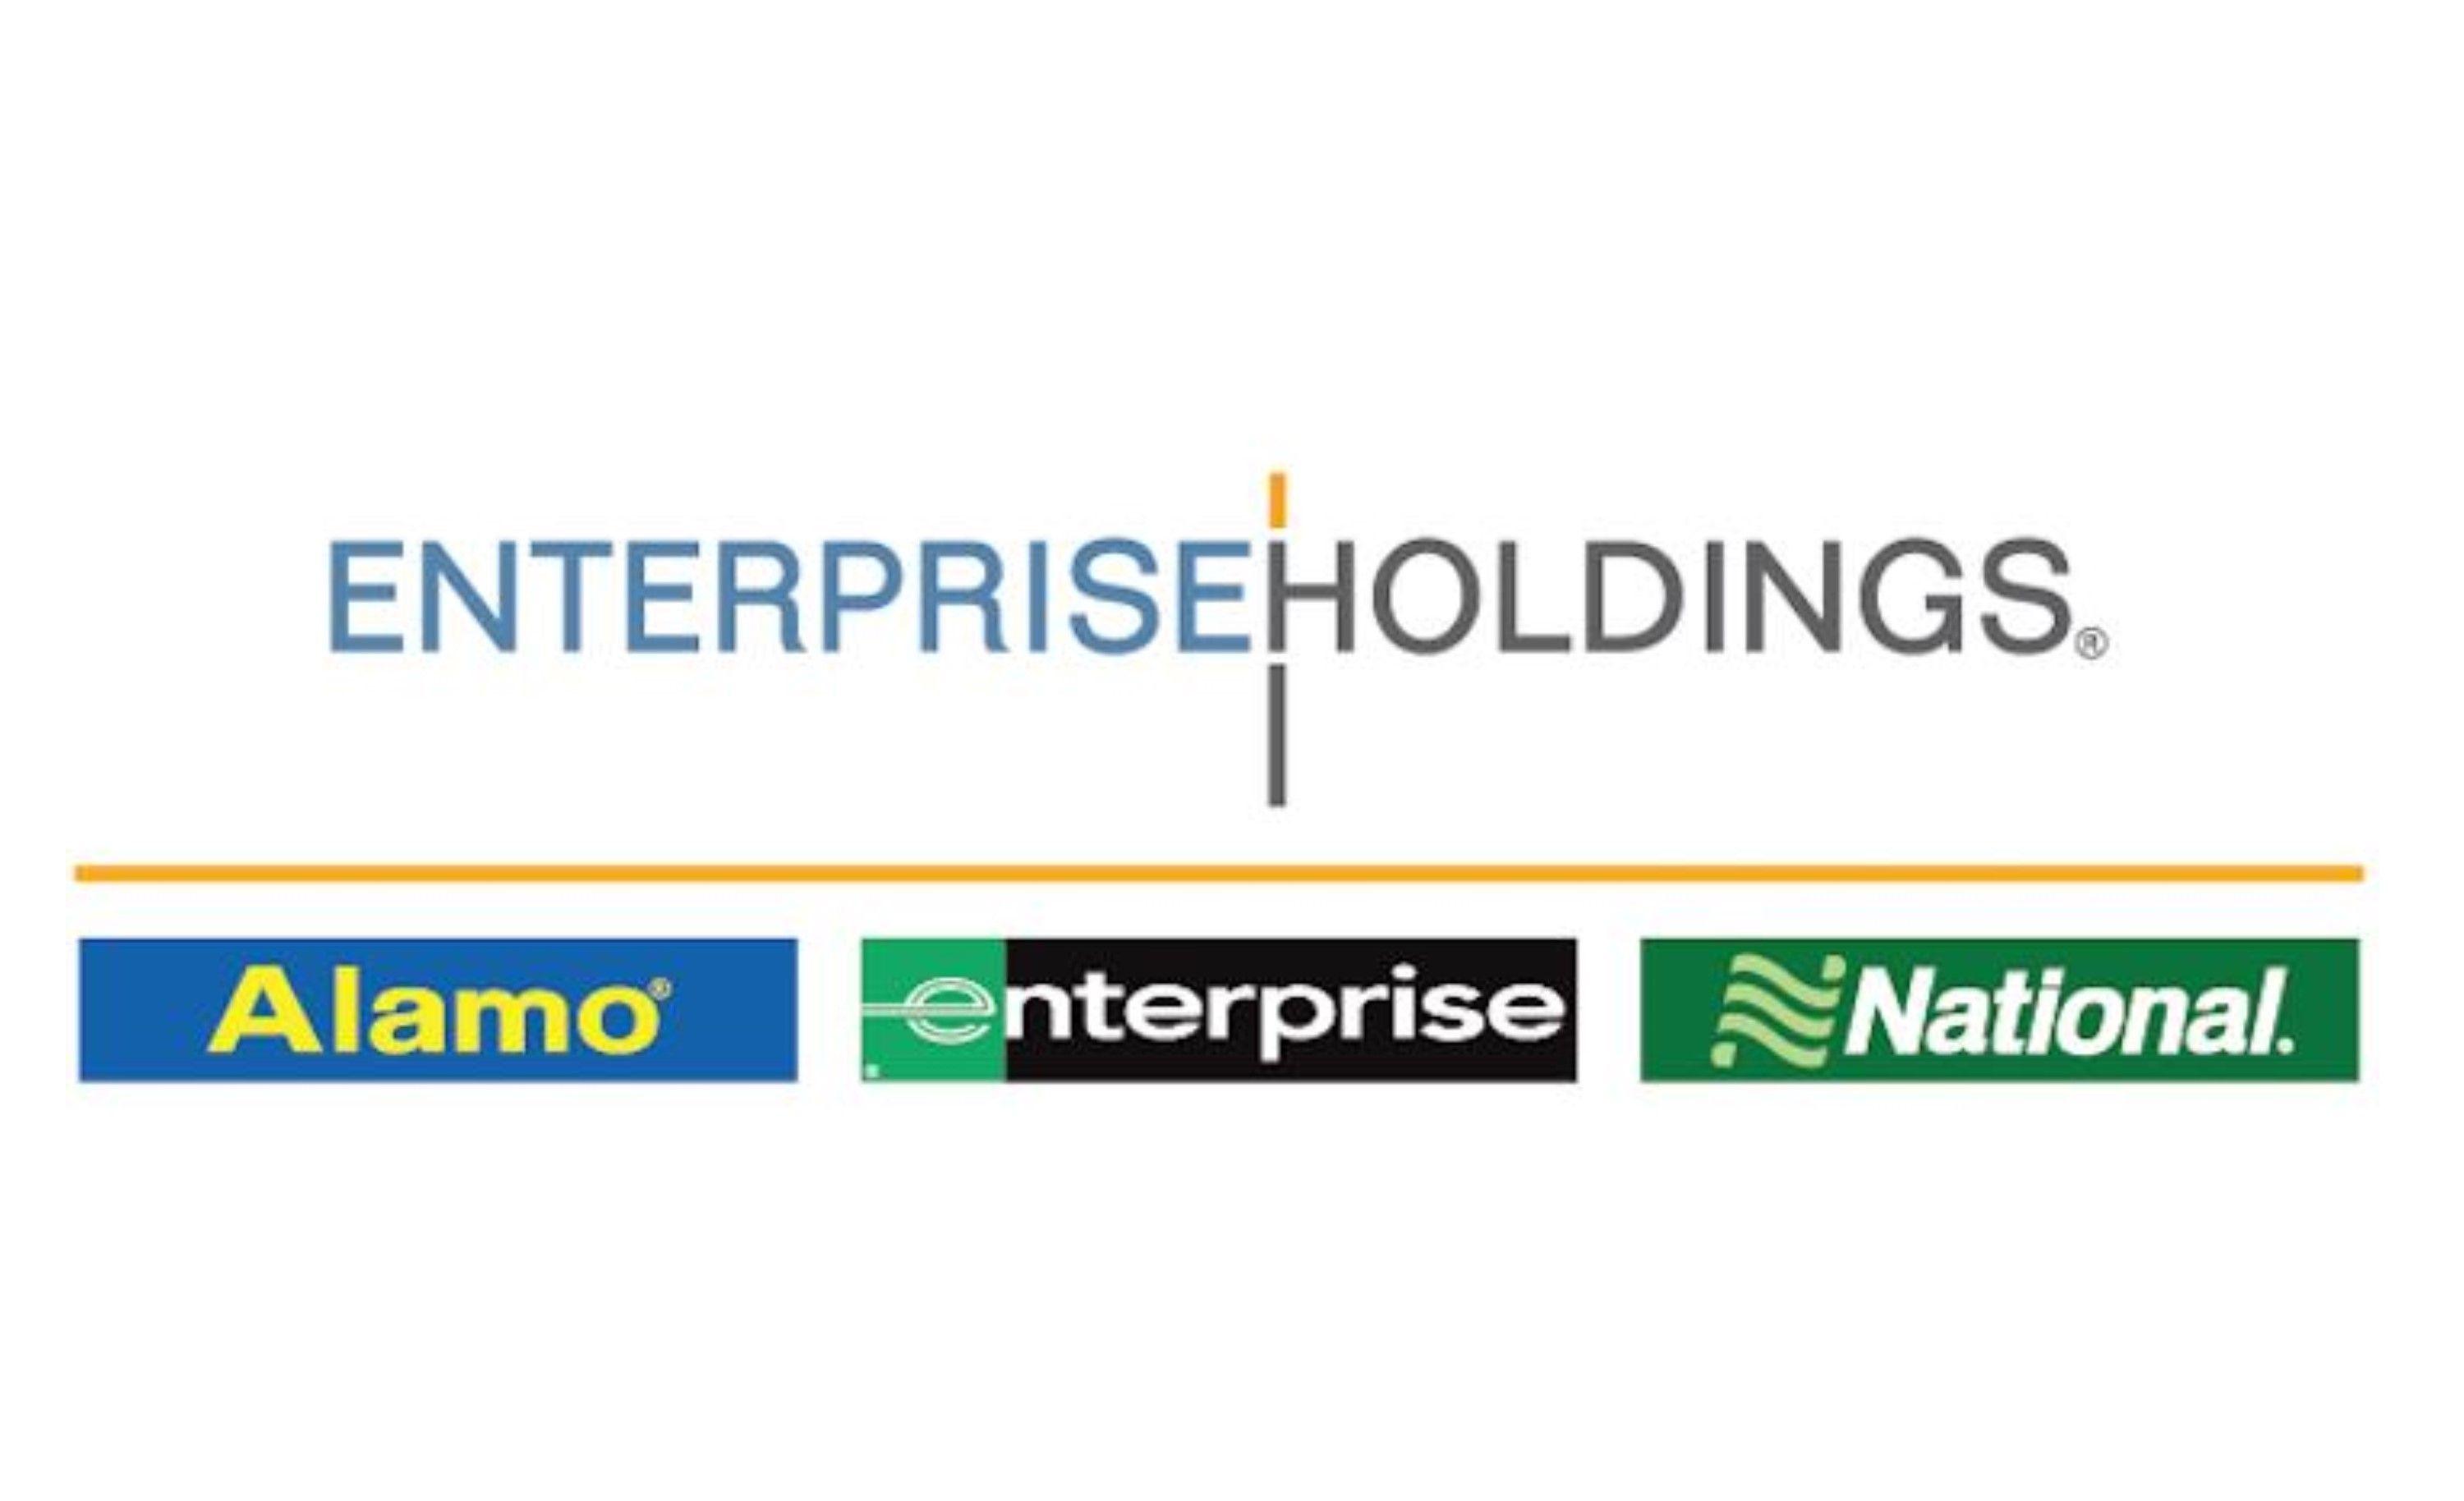 Enterprise Rent a Car Logo - Enterprise Rent A Car